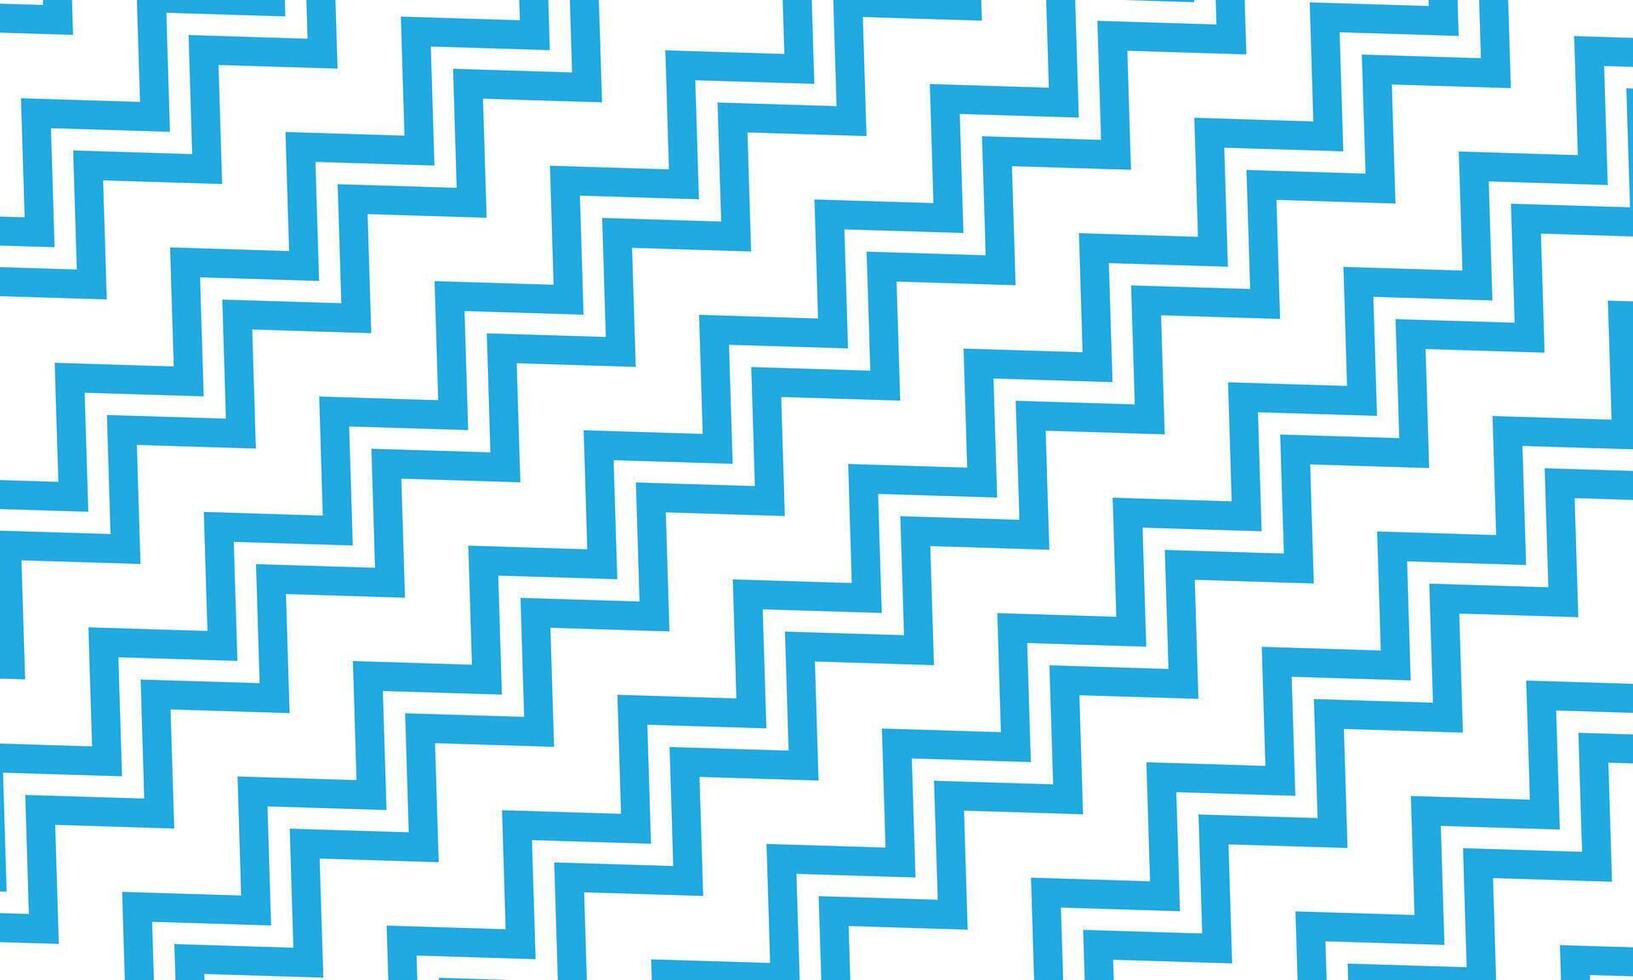 abstract geometric line pattern art illustration. vector